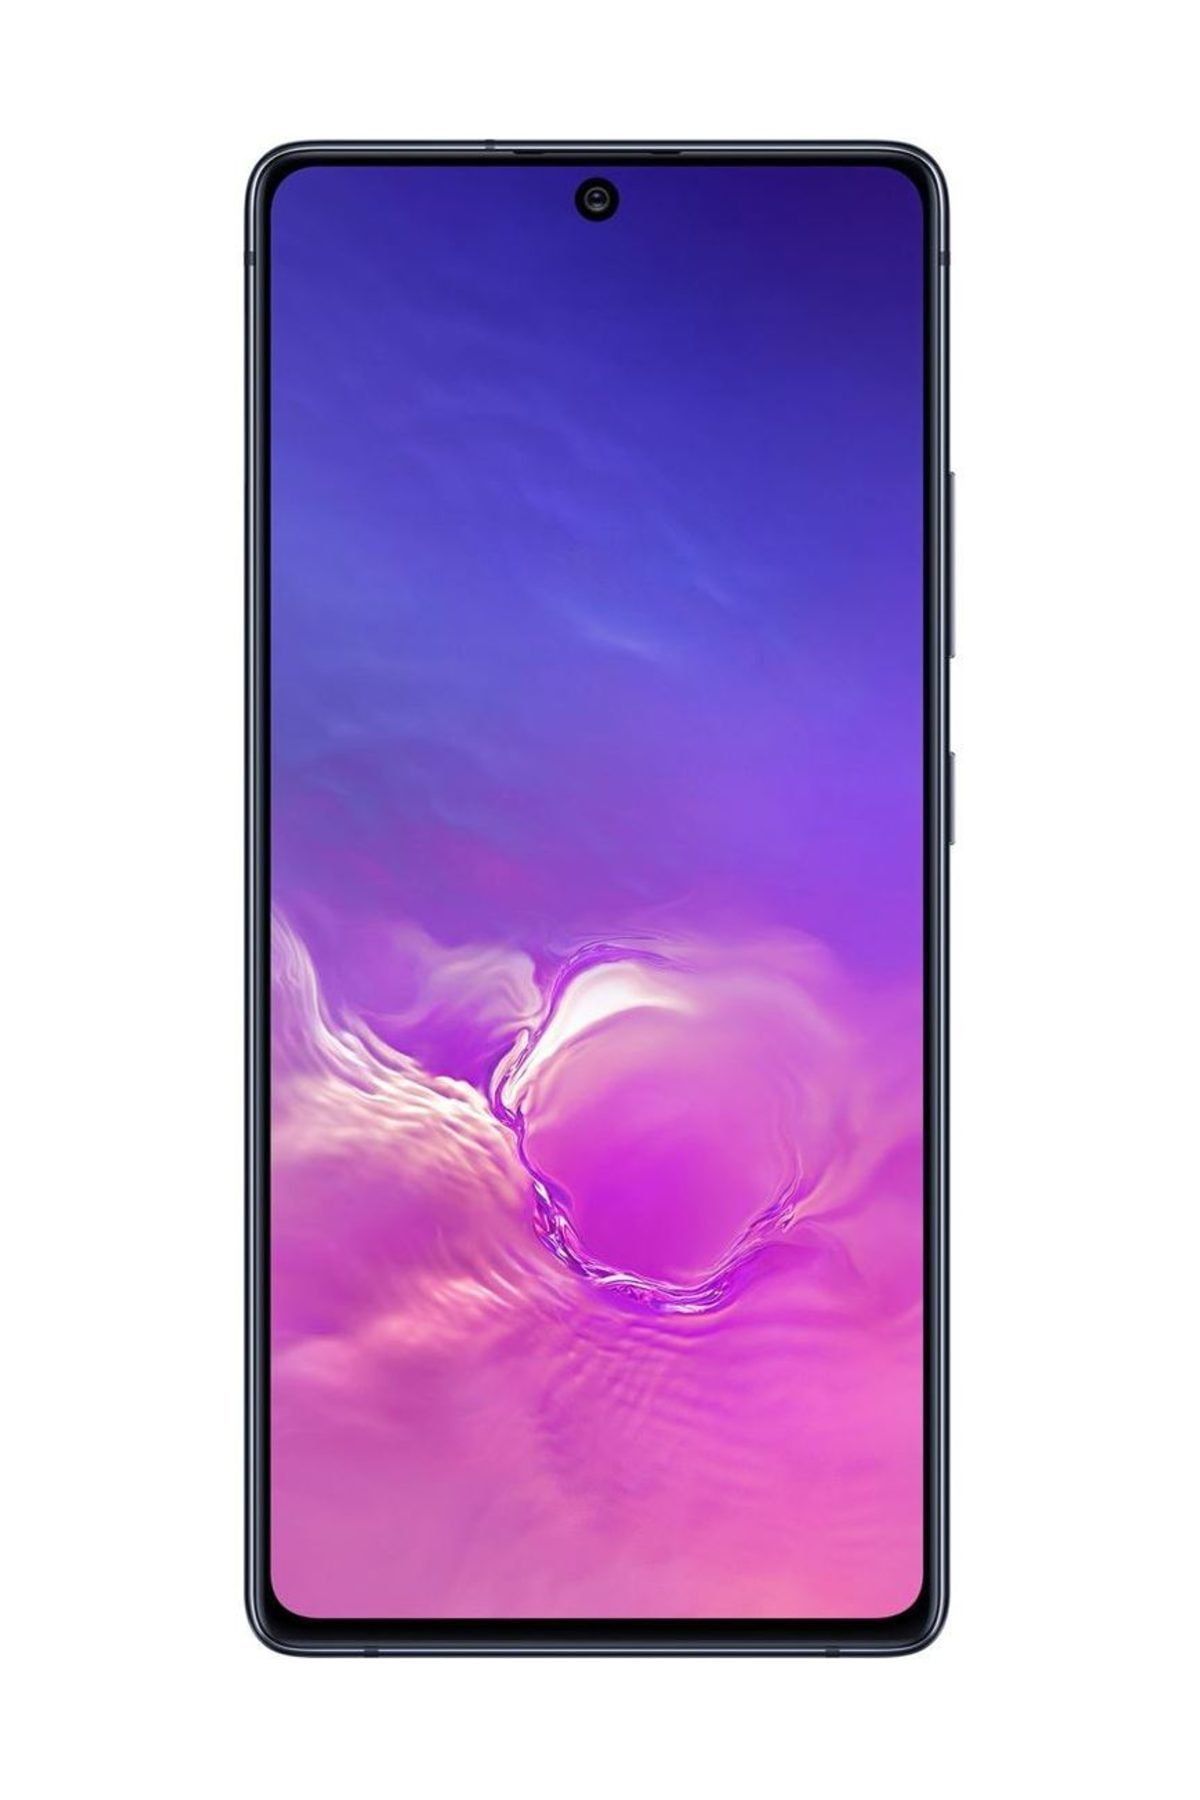 Samsung Galaxy S10 Lite 128GB Prizma Siyah (Çift SIM) Cep Telefonu (Samsung Türkiye Garantili)